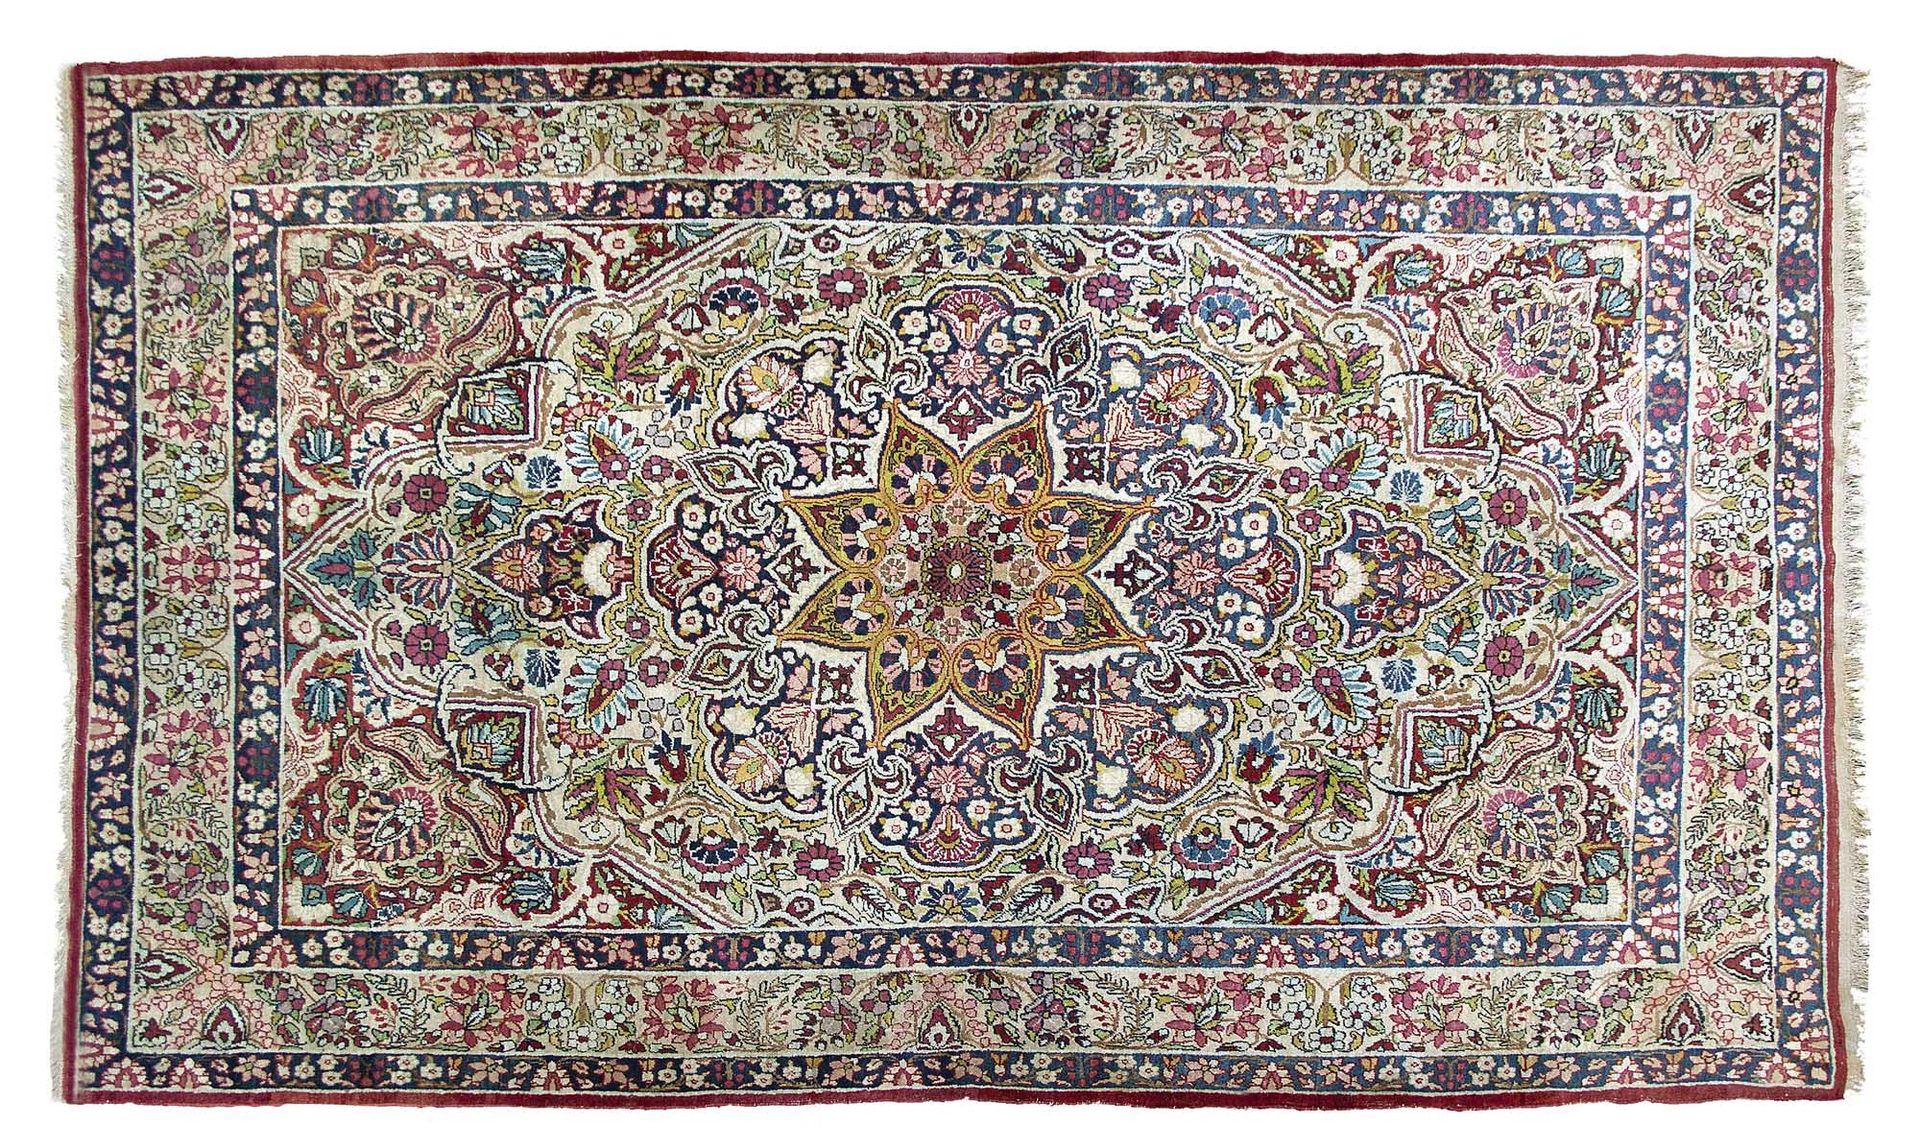 Null Original tapis KIRMAN-LAVER (Perse), fin du 19e siècle

Dimensions : 220 x &hellip;